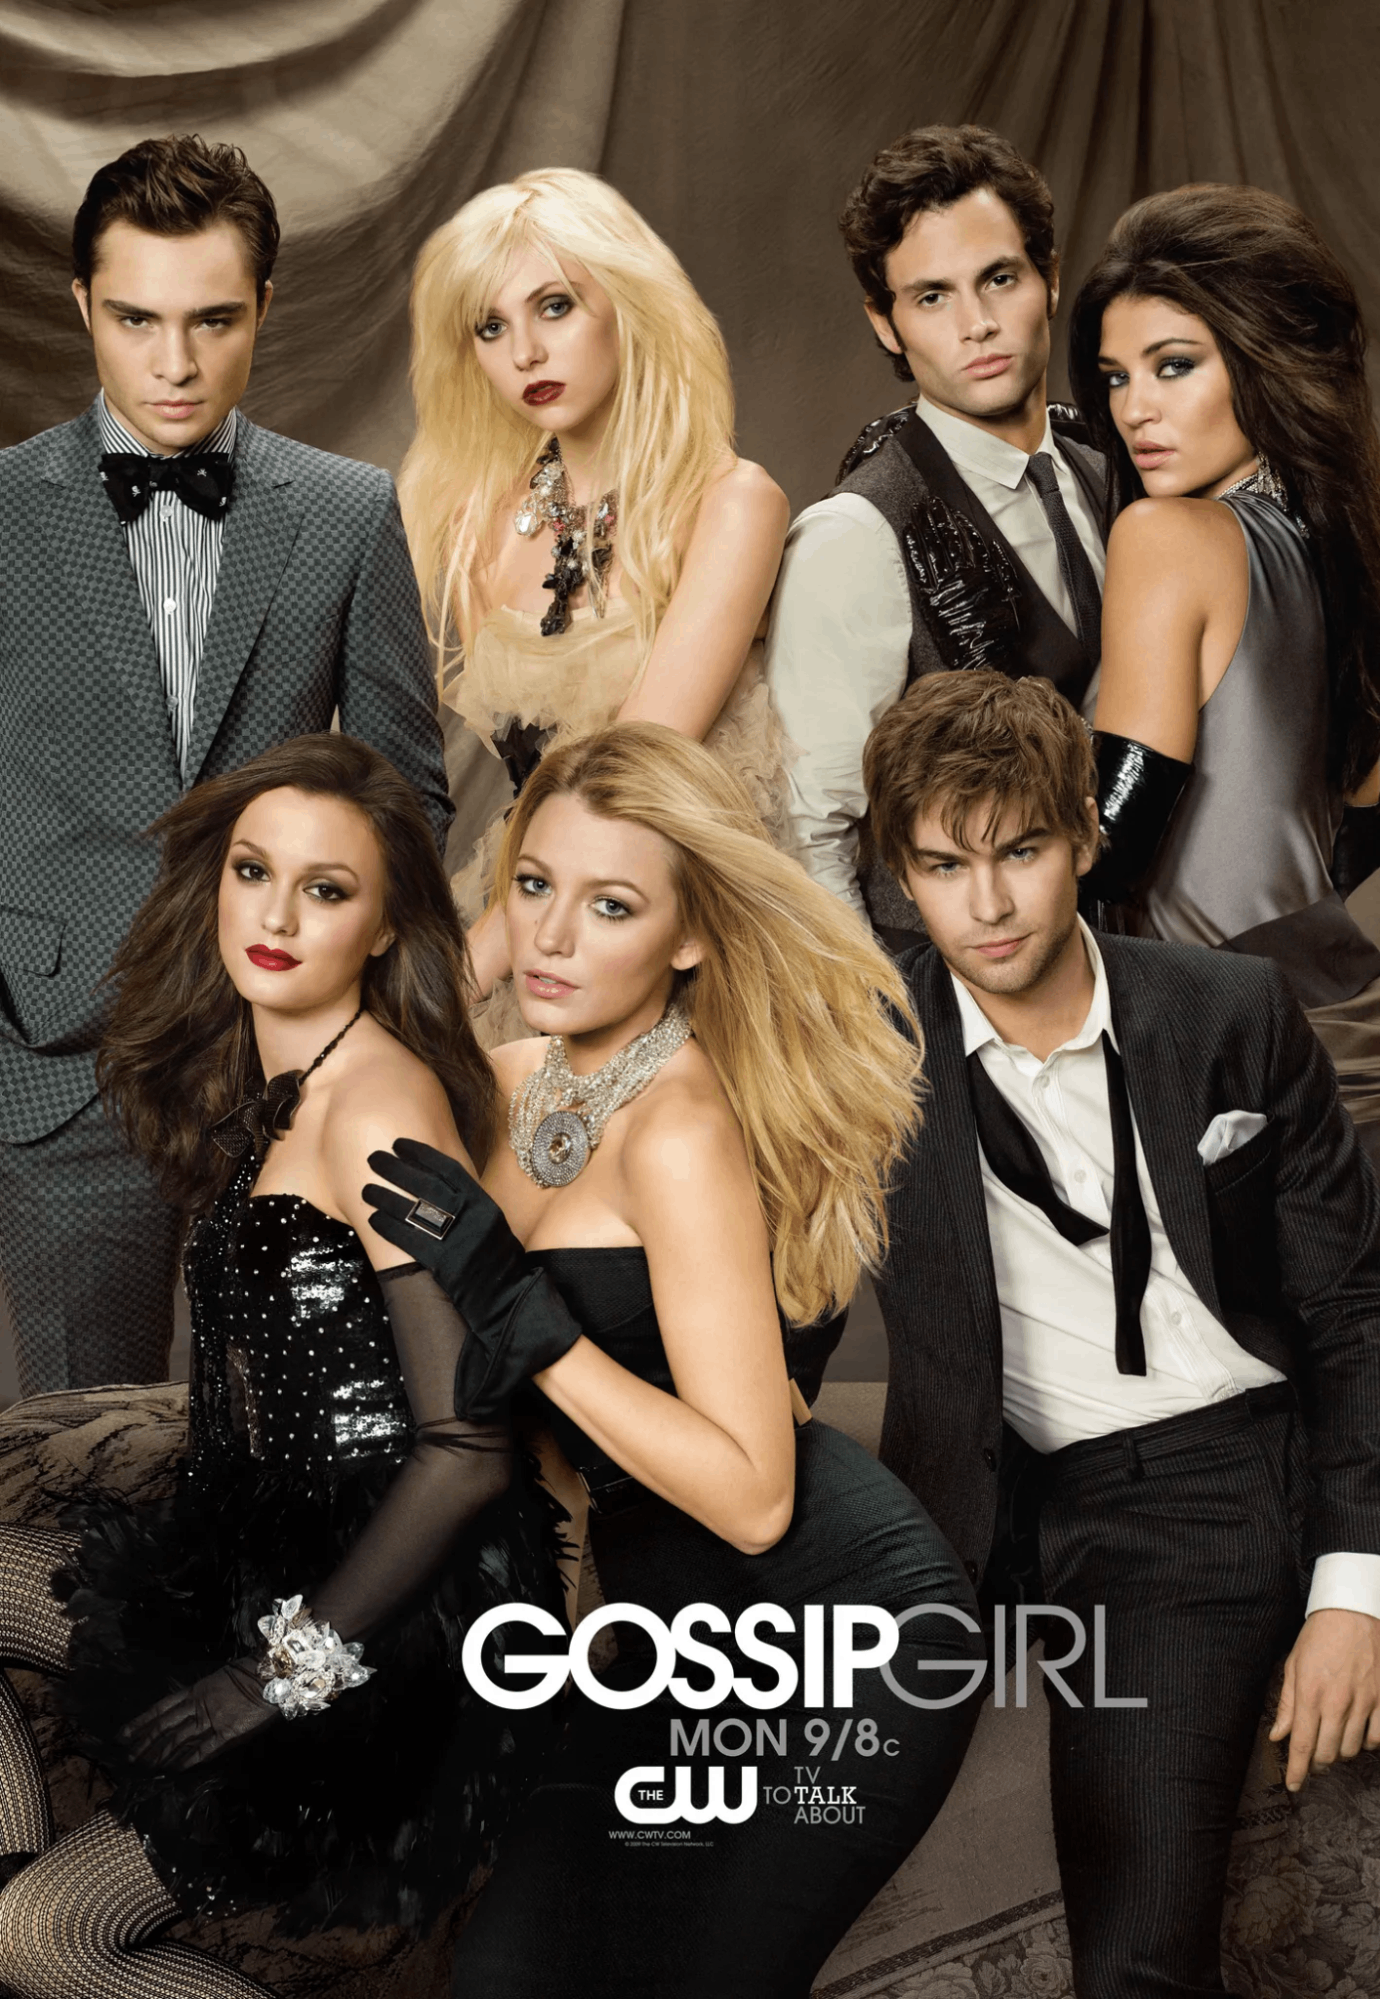 The Gossip Girl series poster